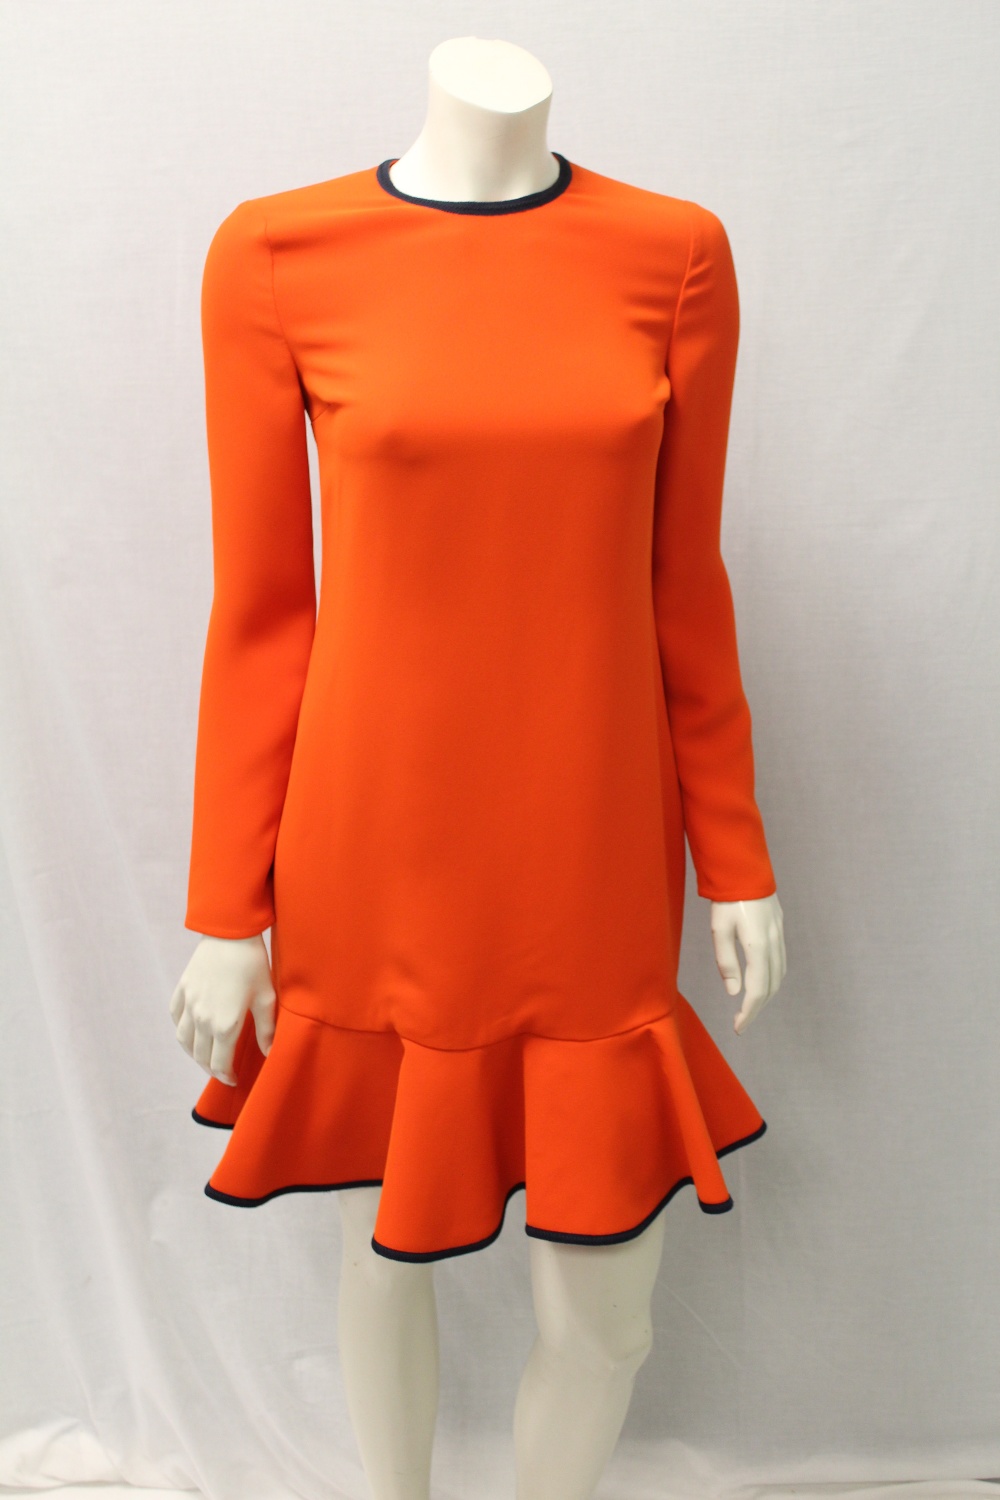 VICTORIA BECKHAM, a ladies short red dress, size 6